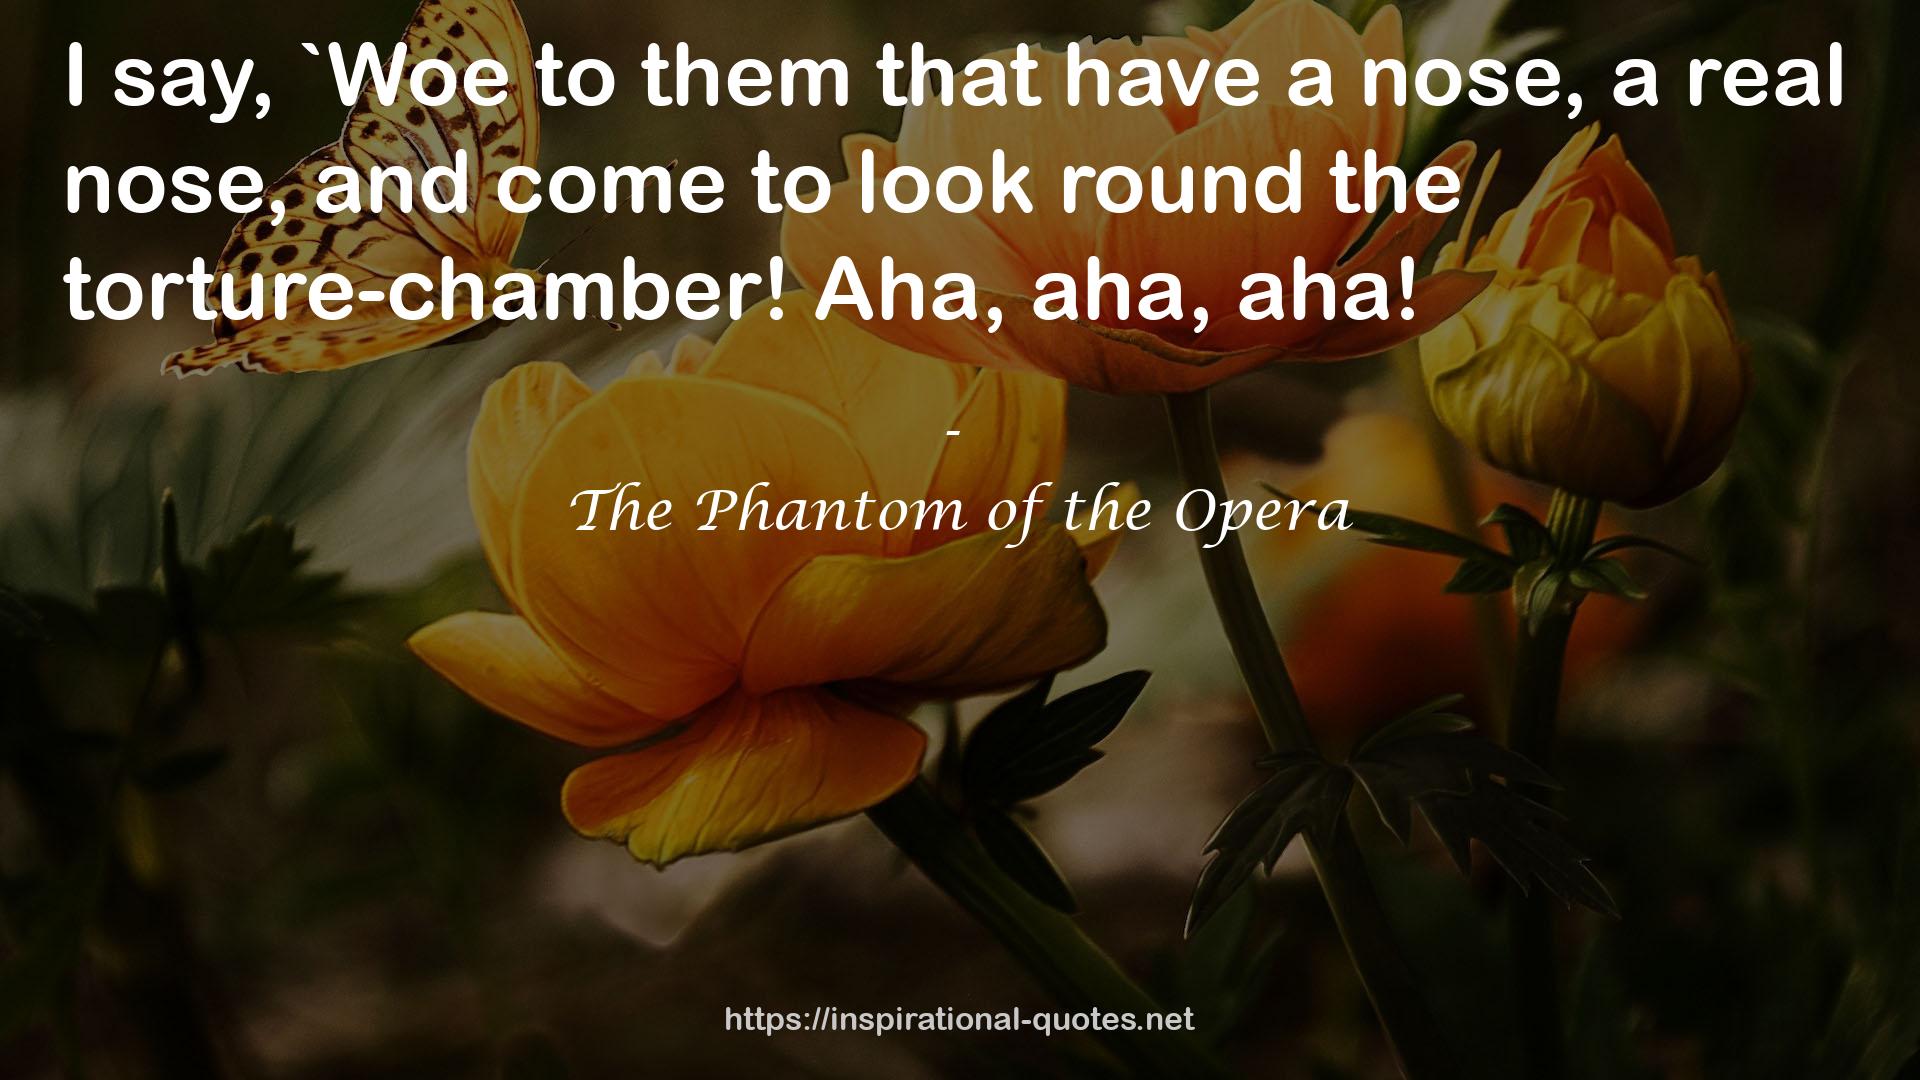 The Phantom of the Opera QUOTES